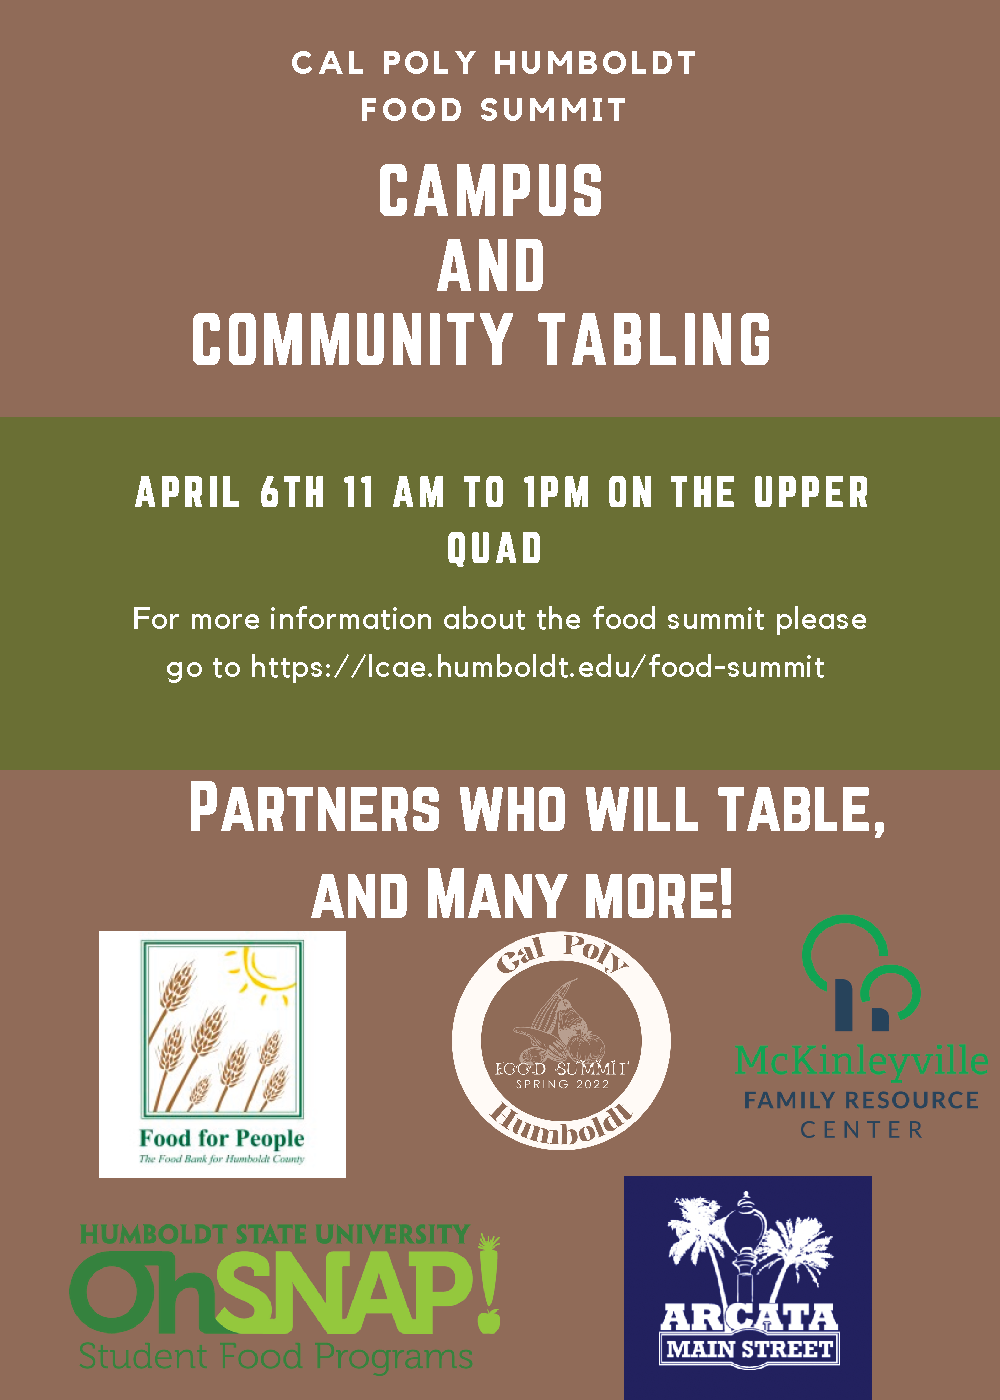 Campus & Community Food Summit Tabling Event April 6 11am to 1pm Upper Quad